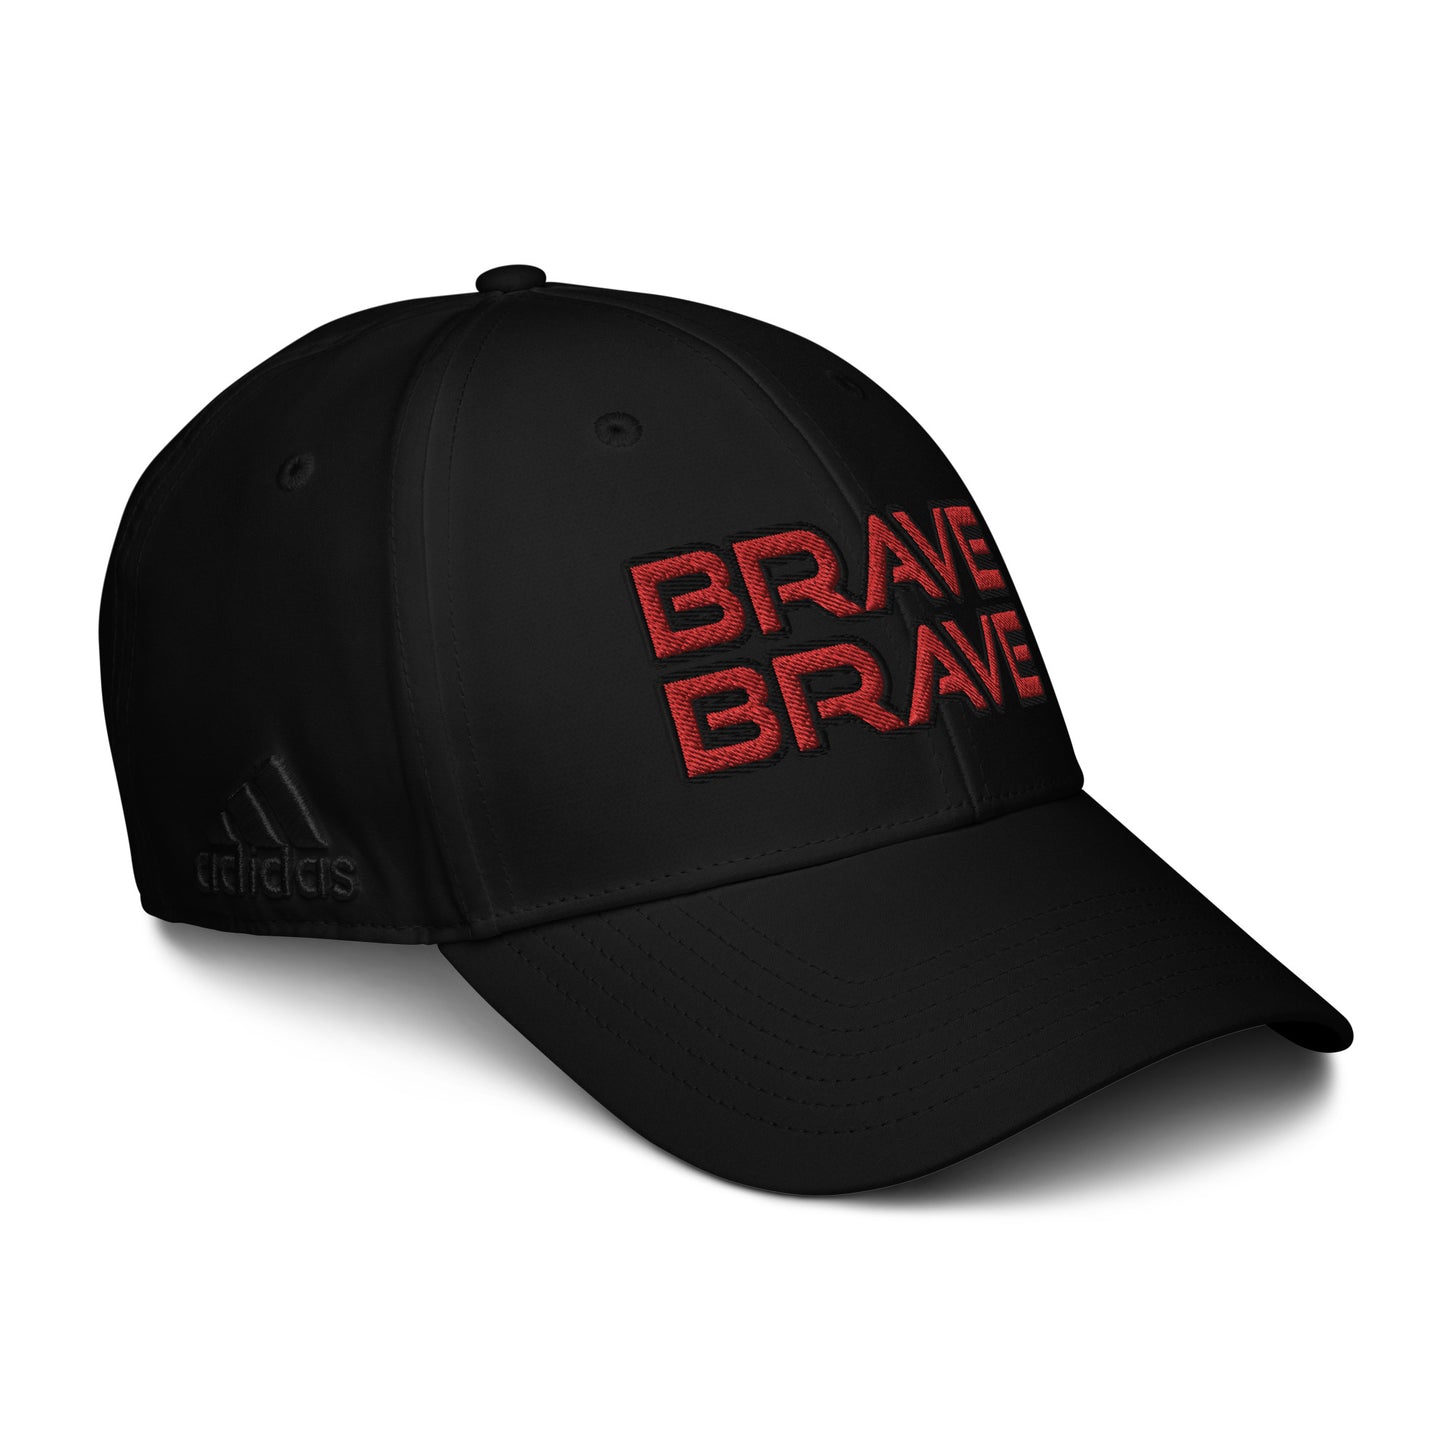 BRAVE BRAVE- adidas dad hat